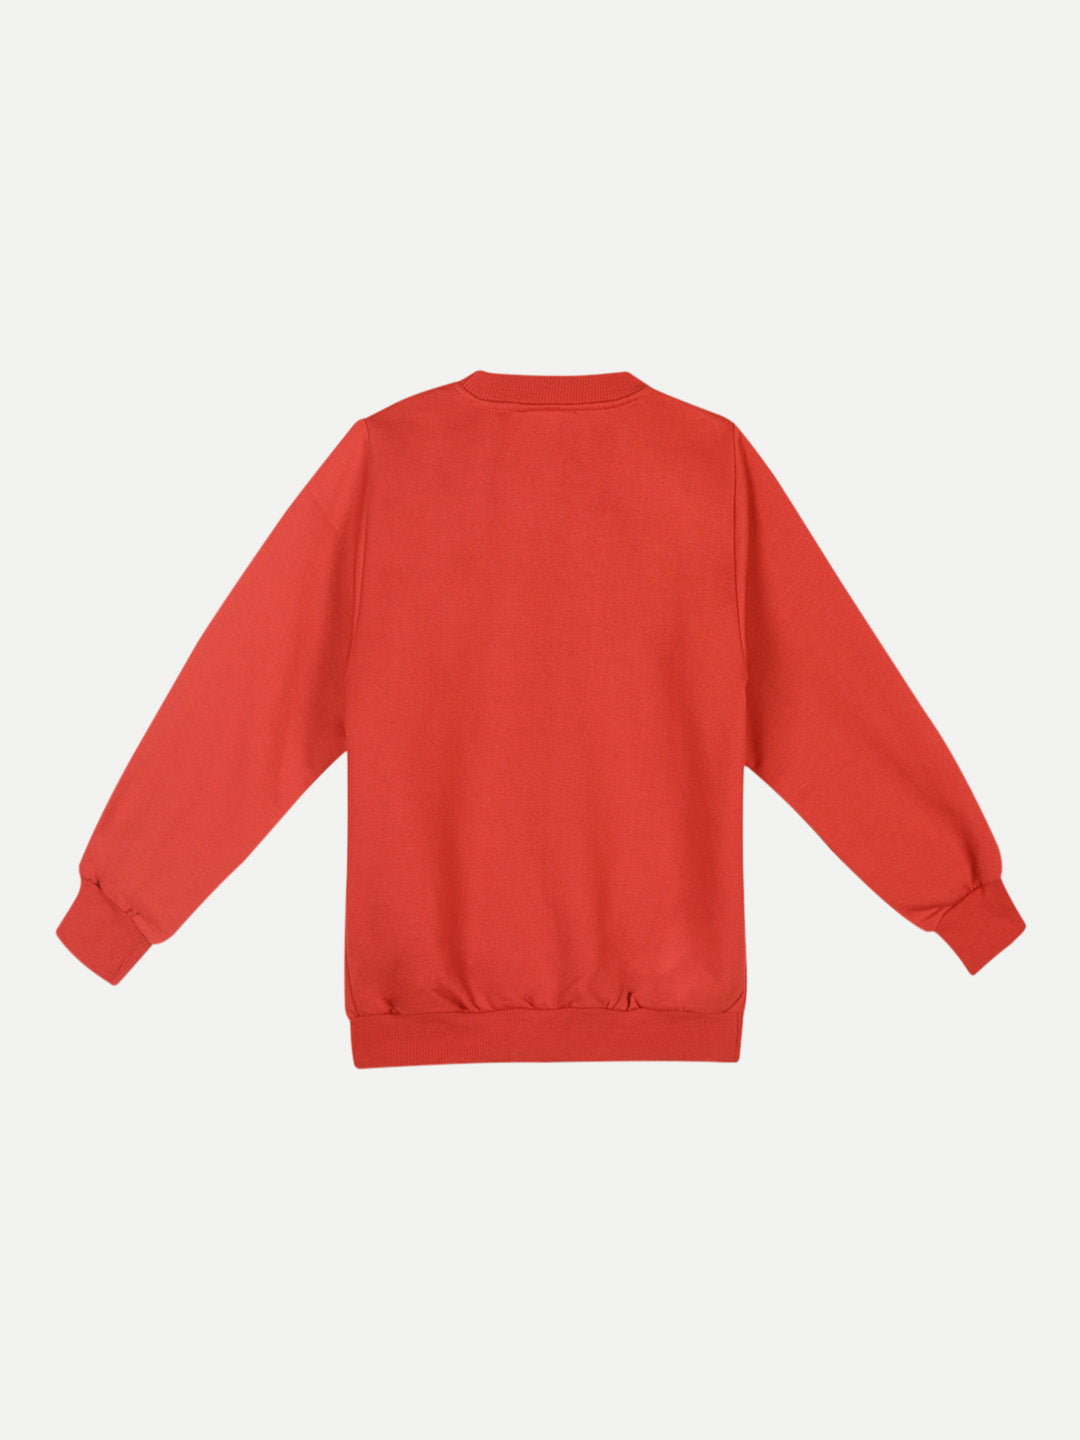 Cutiekins Pack of 2 Sweatshirt-Royal Blue & Red